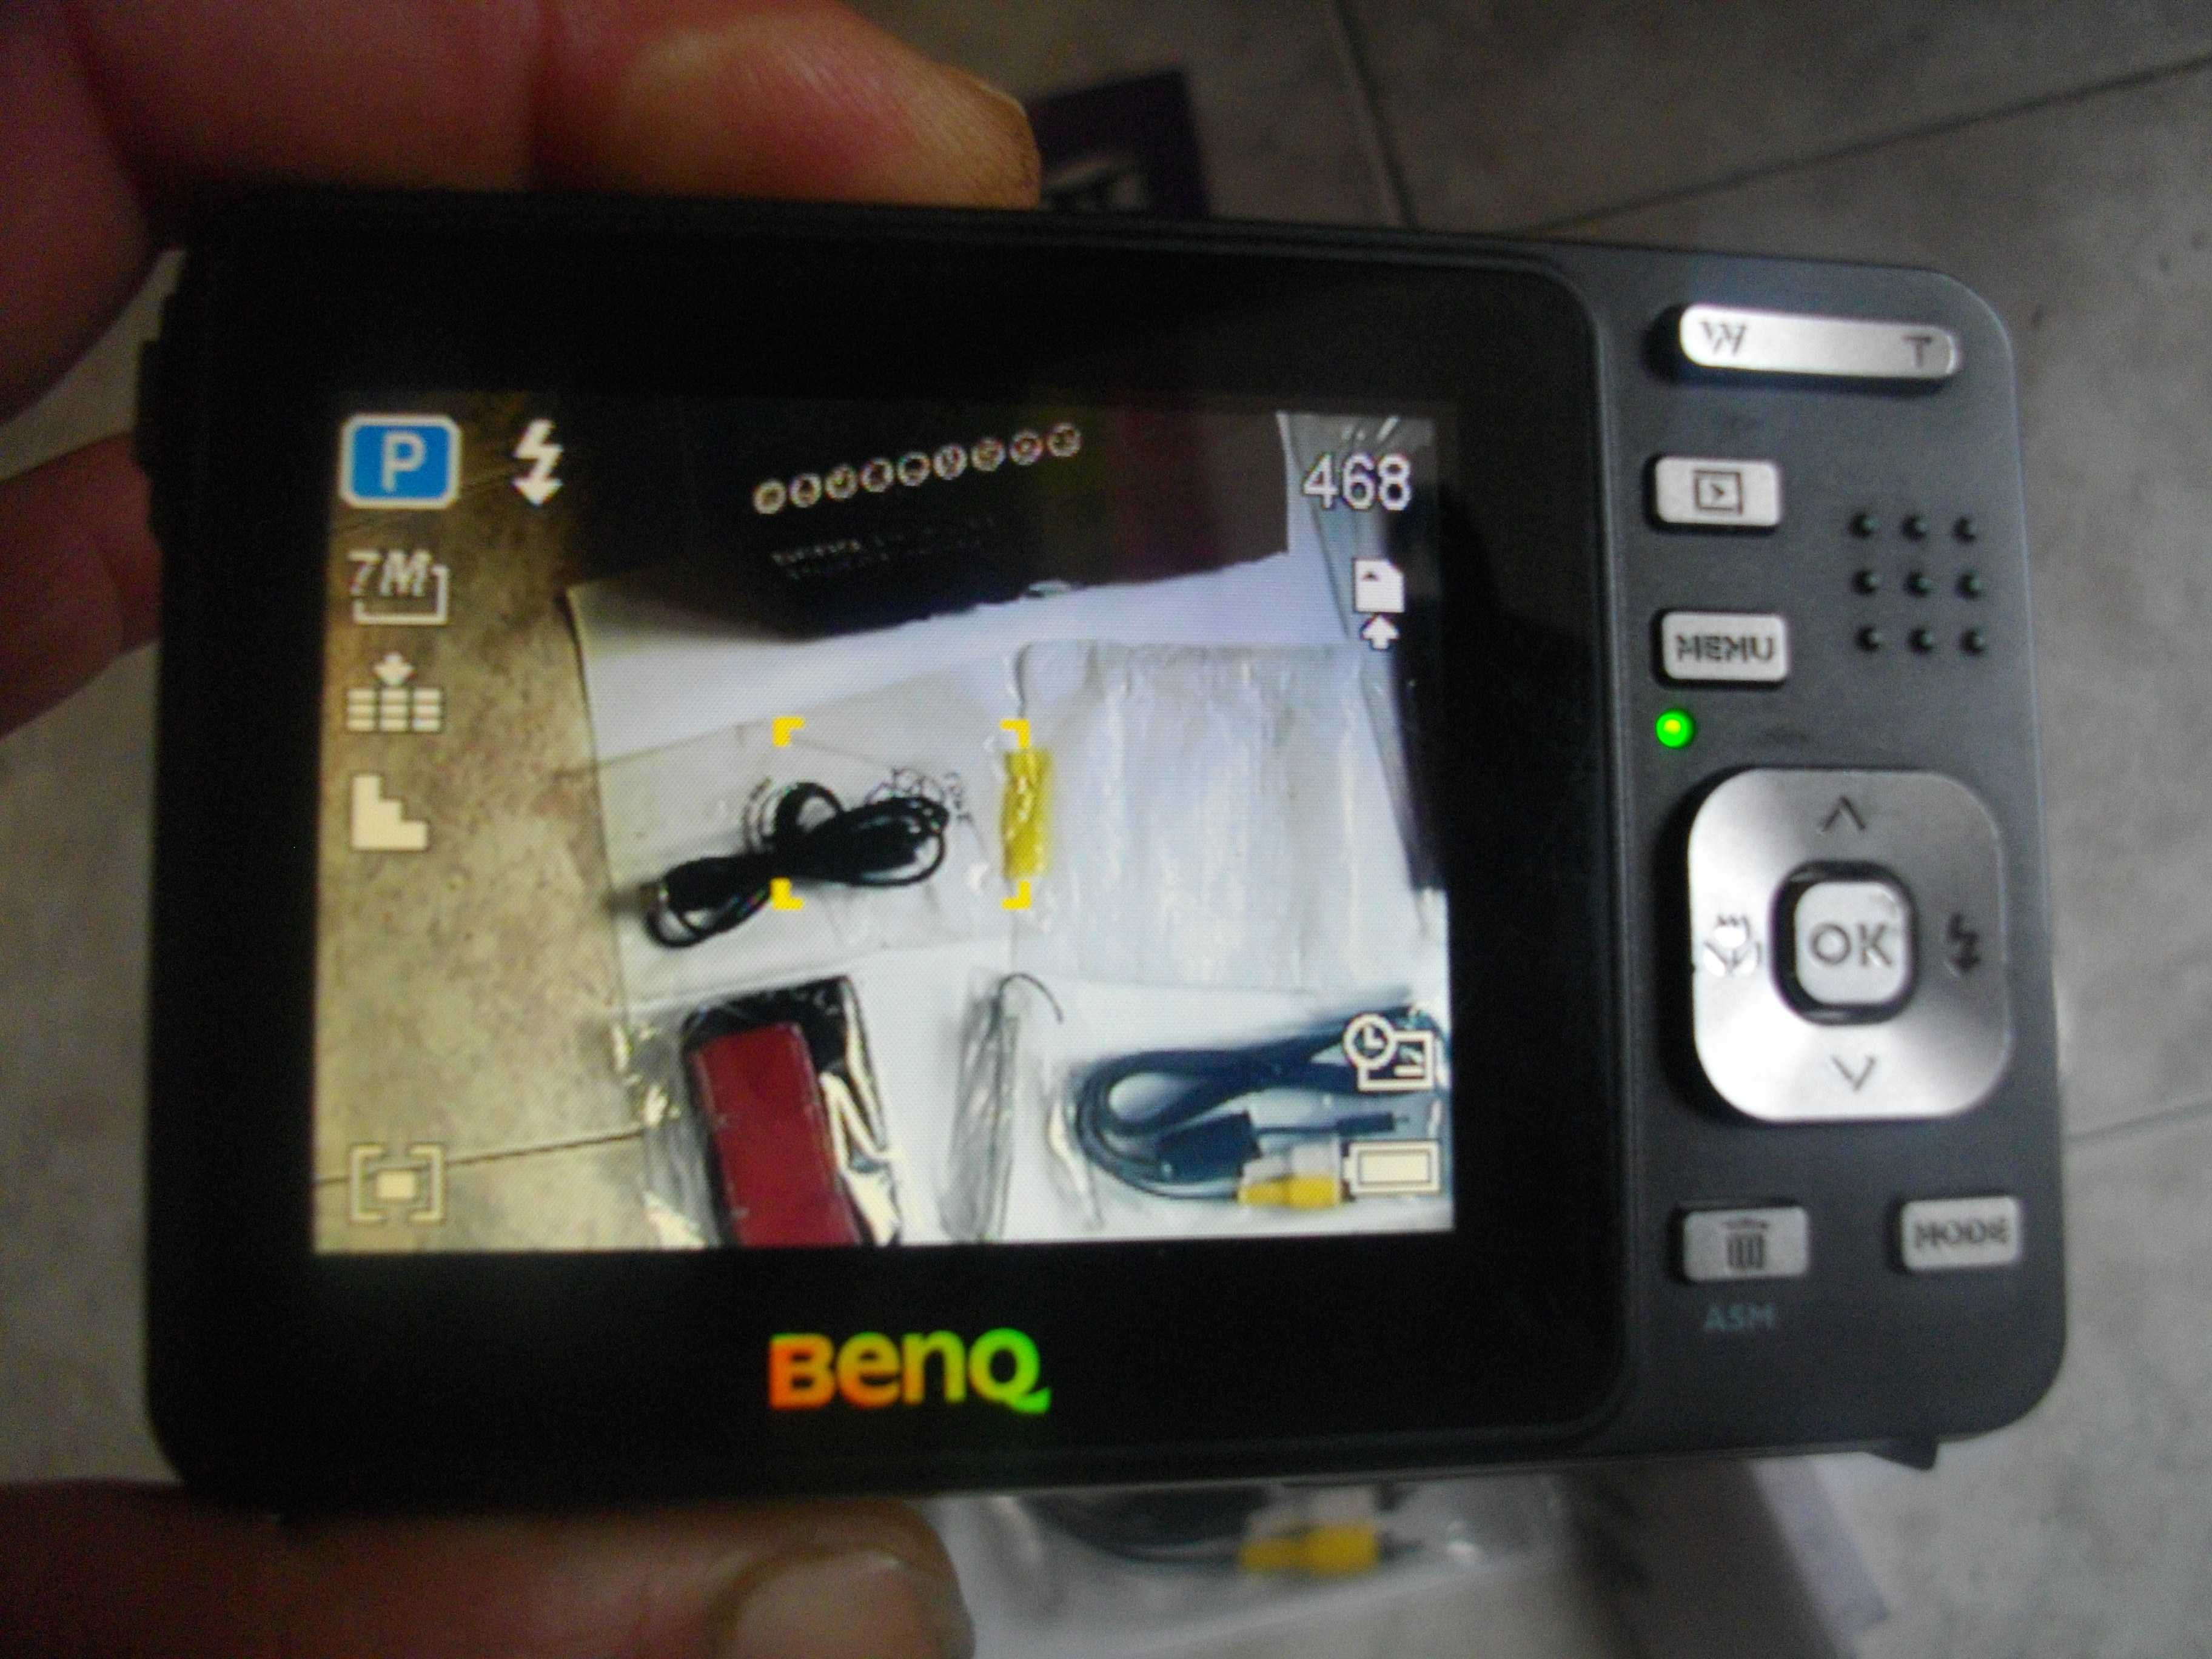 BENQ DC C740-Digital Camera-7,0MP-Pentium-64MB RAM-Фотоапарат